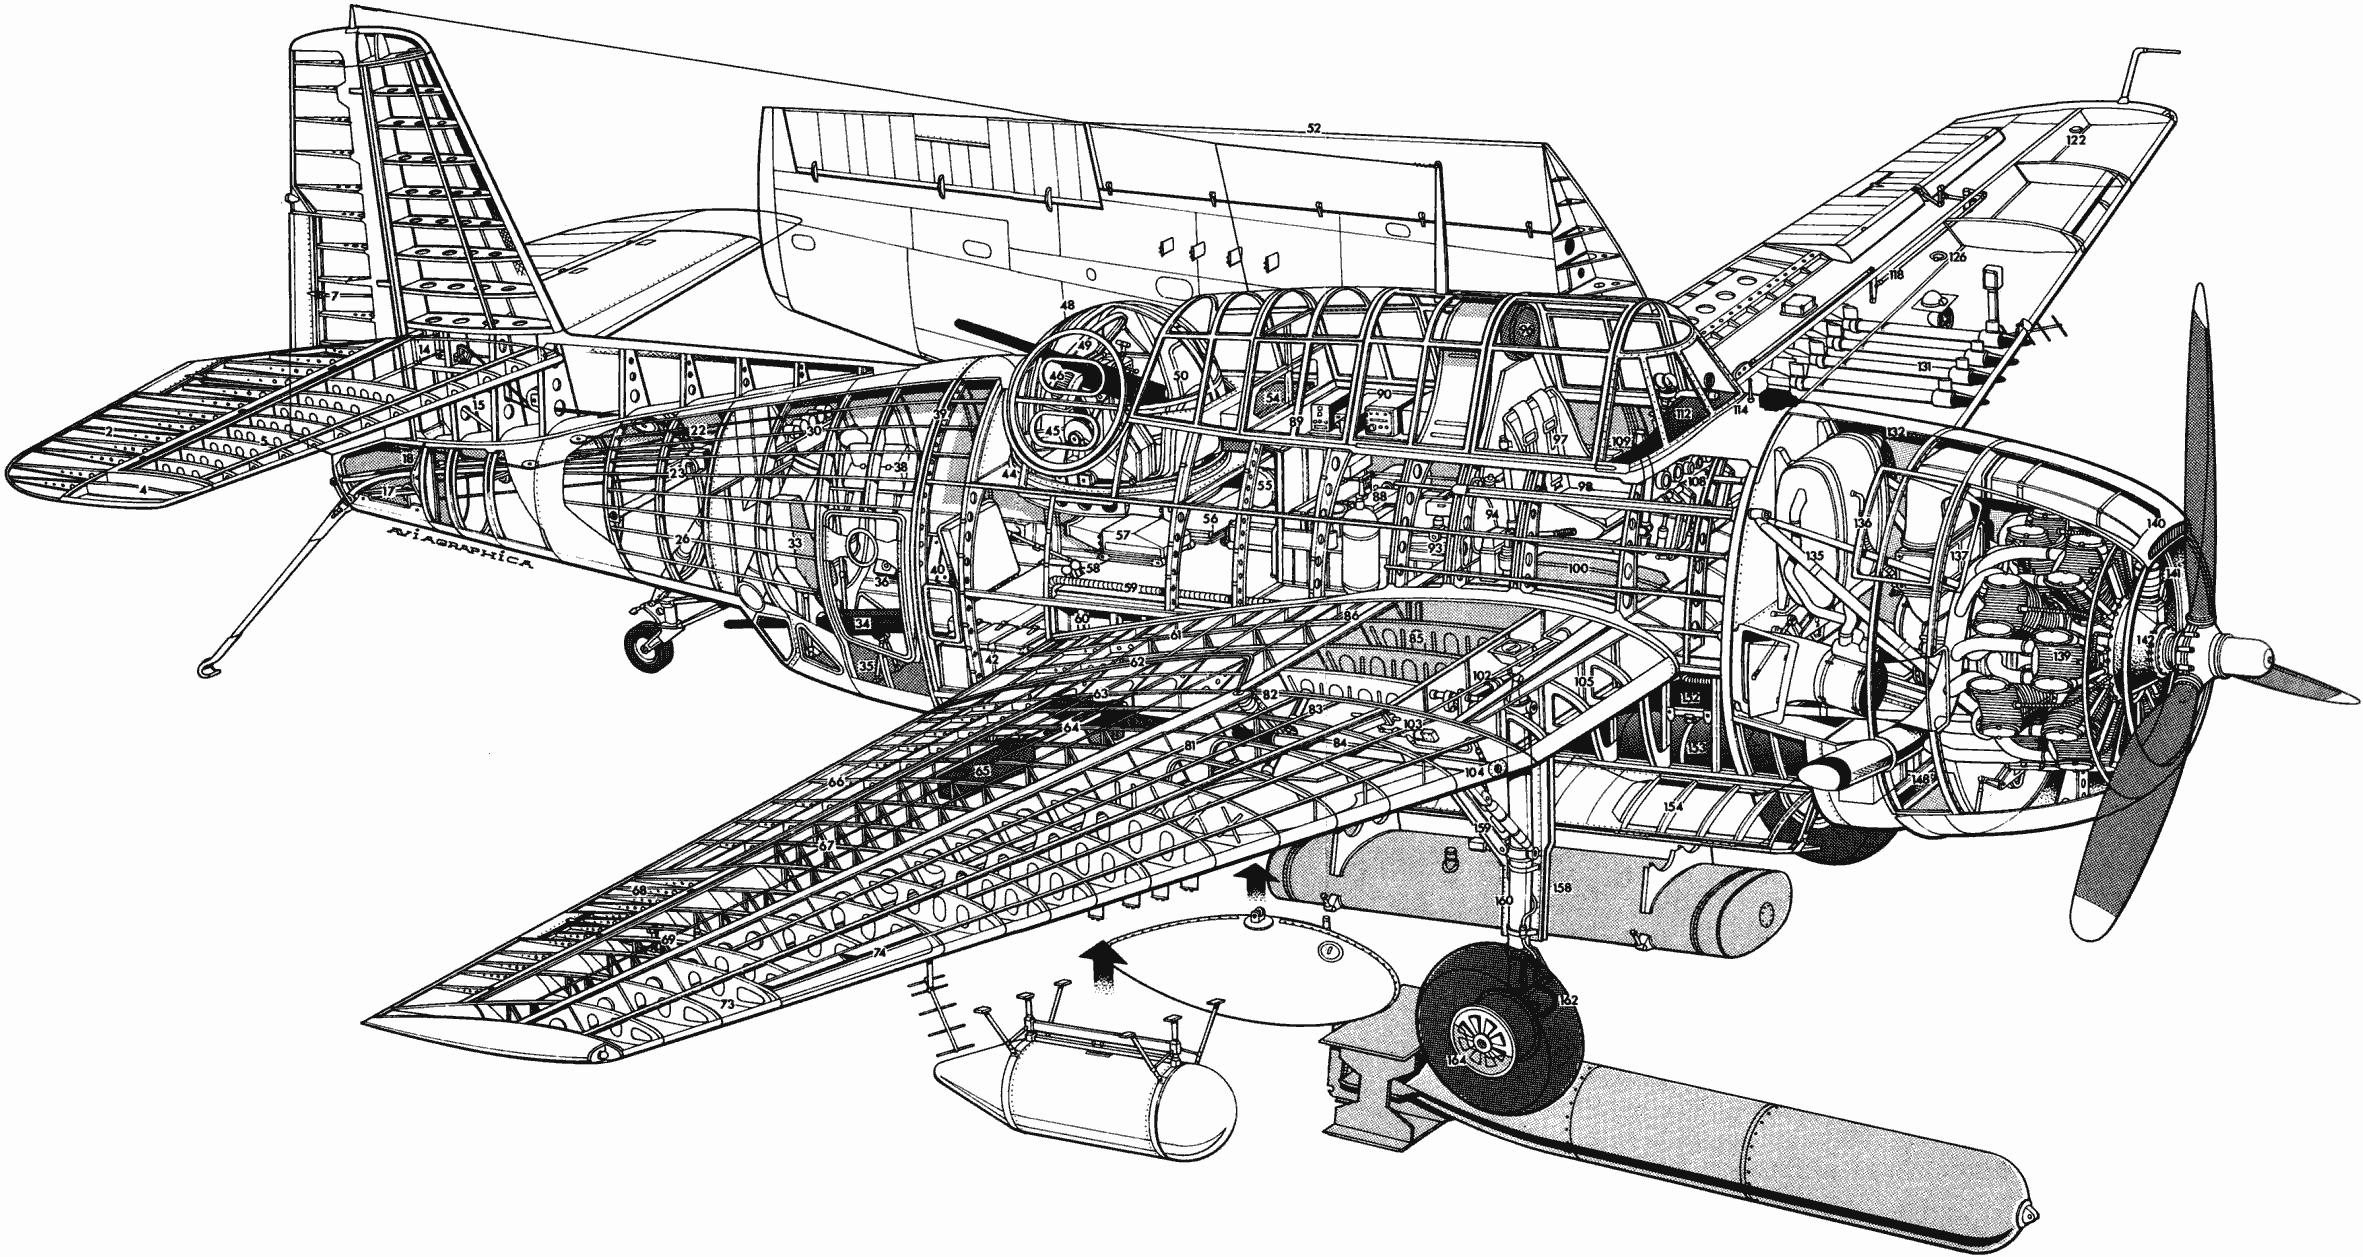 Grumman TBF Avenger cutaway